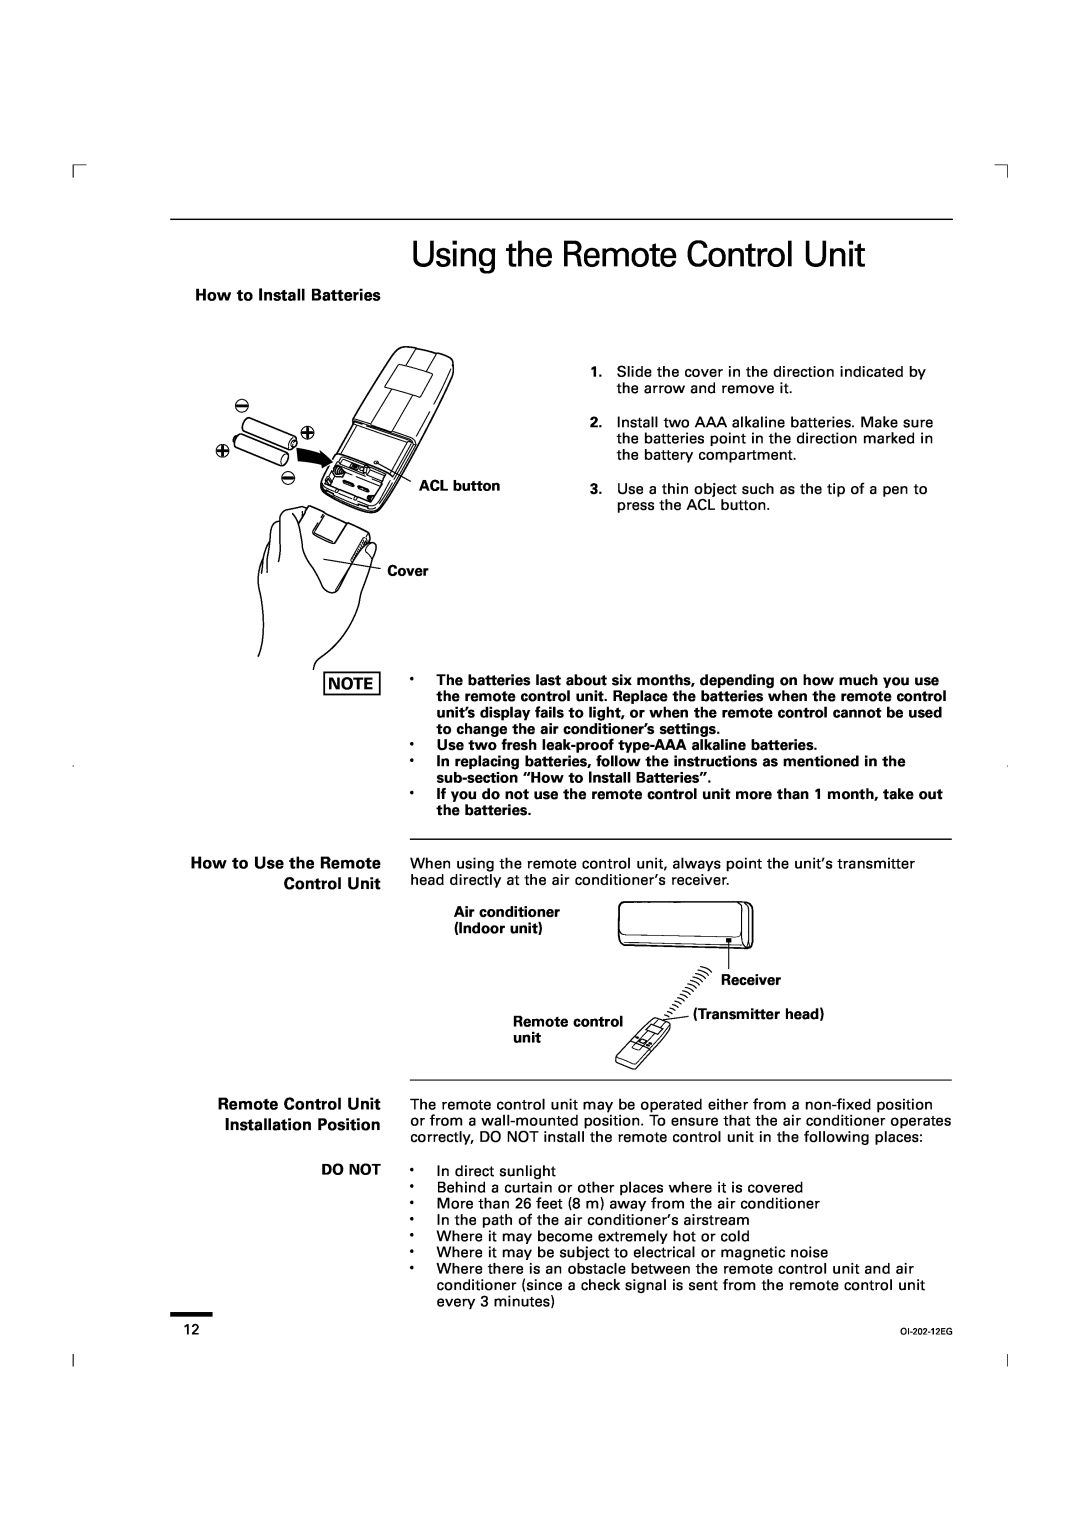 Sanyo CG1411, KGS1411 Using the Remote Control Unit, How to Install Batteries, How to Use the Remote Control Unit 